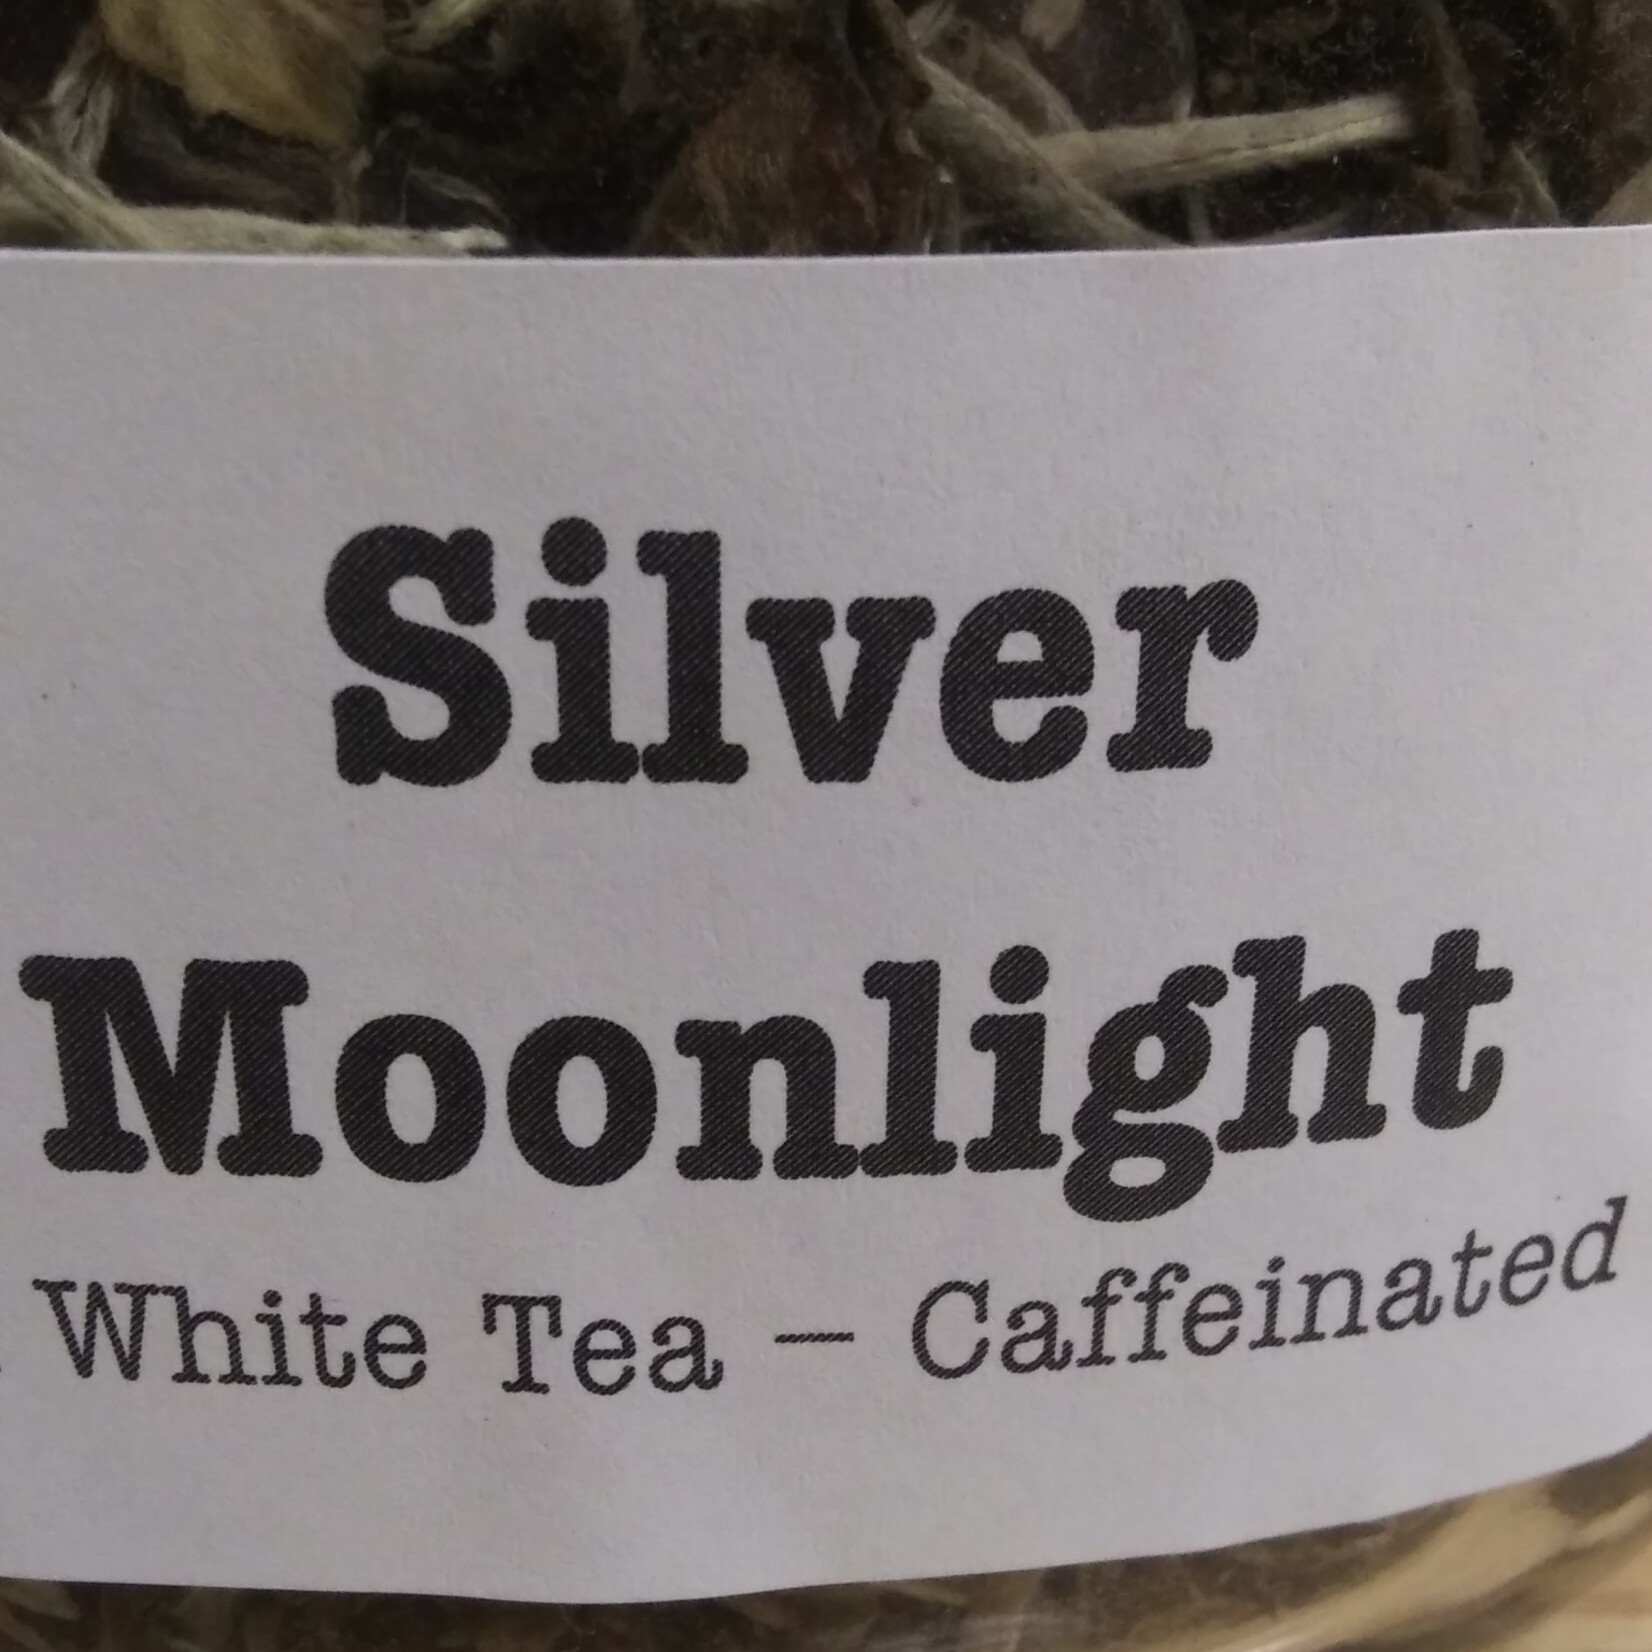 White Tea 2 oz Package: Silver Moonlight